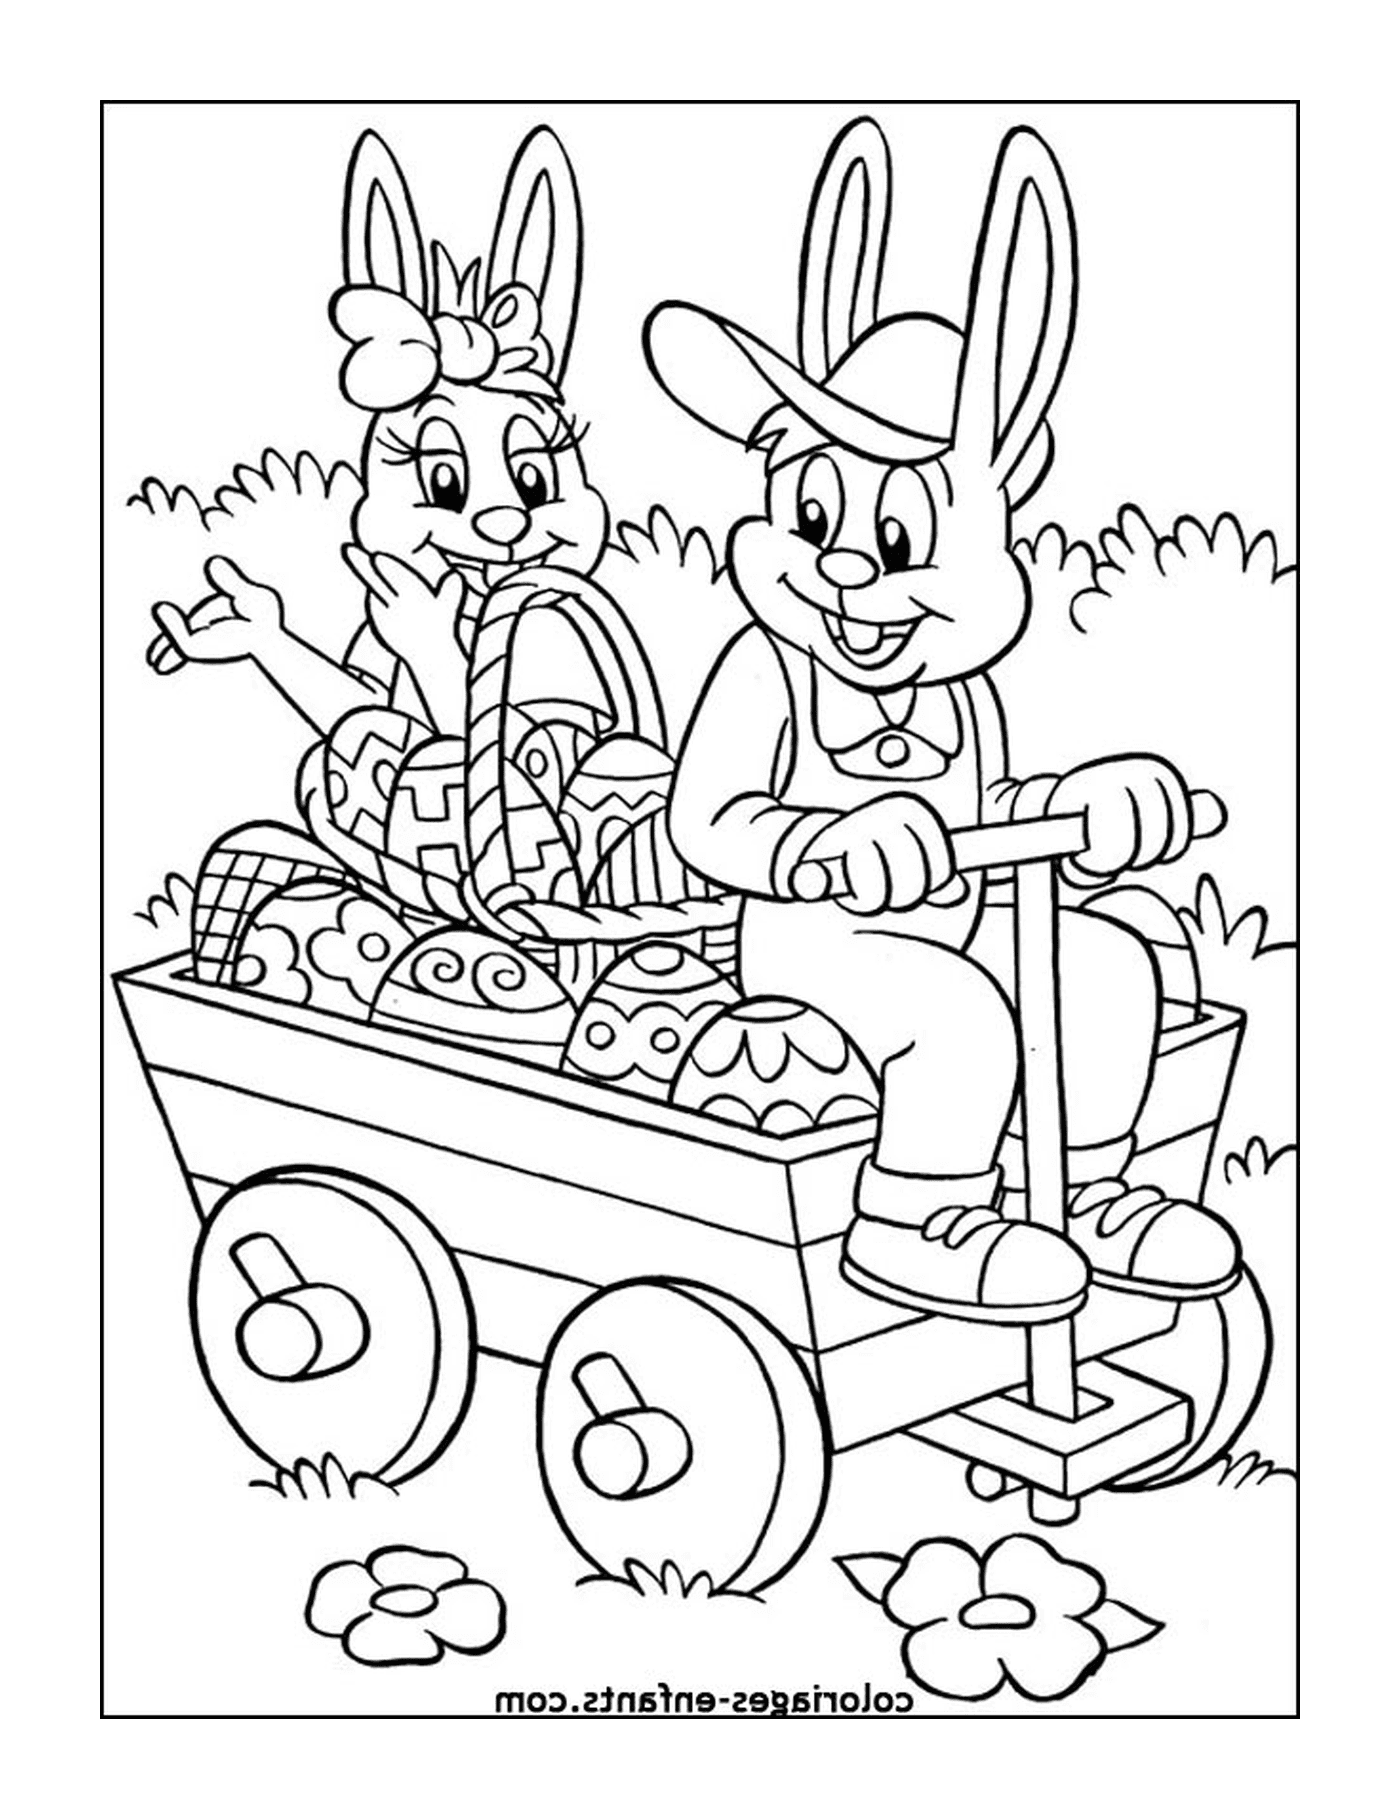  An Easter rabbit pulling a cart 